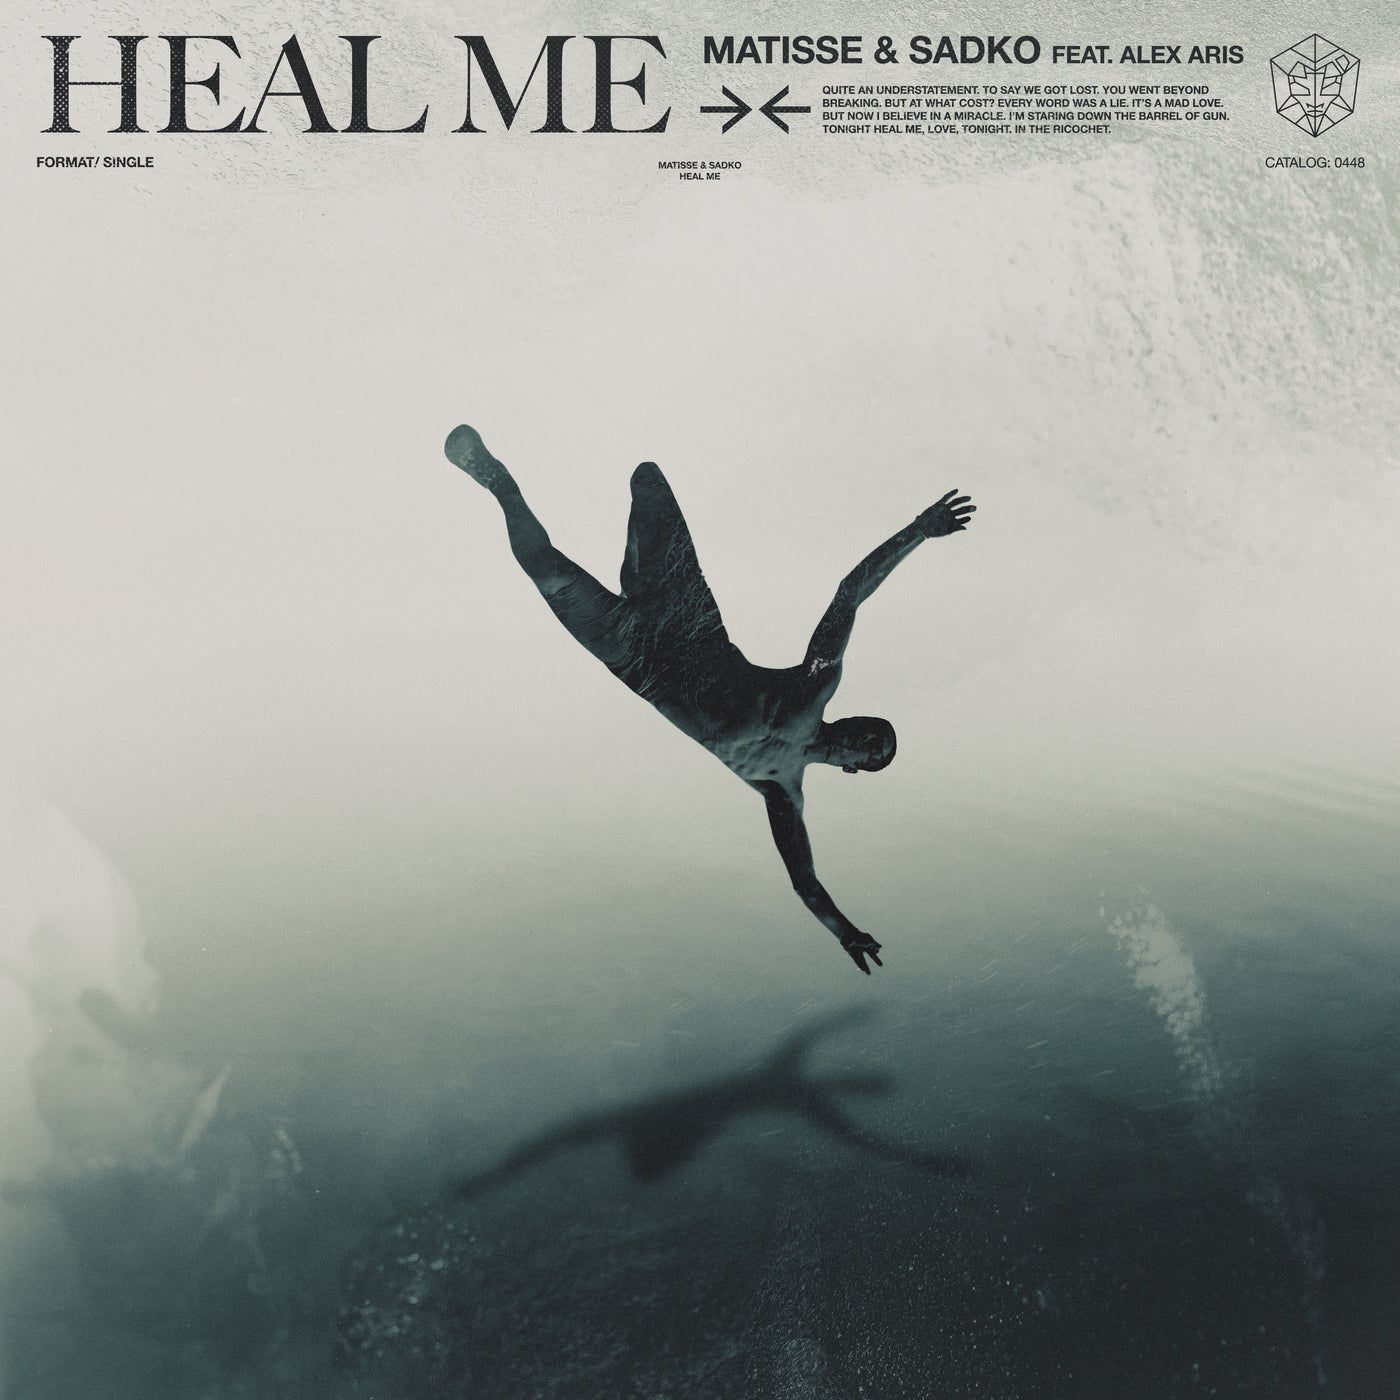 Matisse & Sadko, Alex Aris – Heal Me – Extended Mix [STMPD448B]